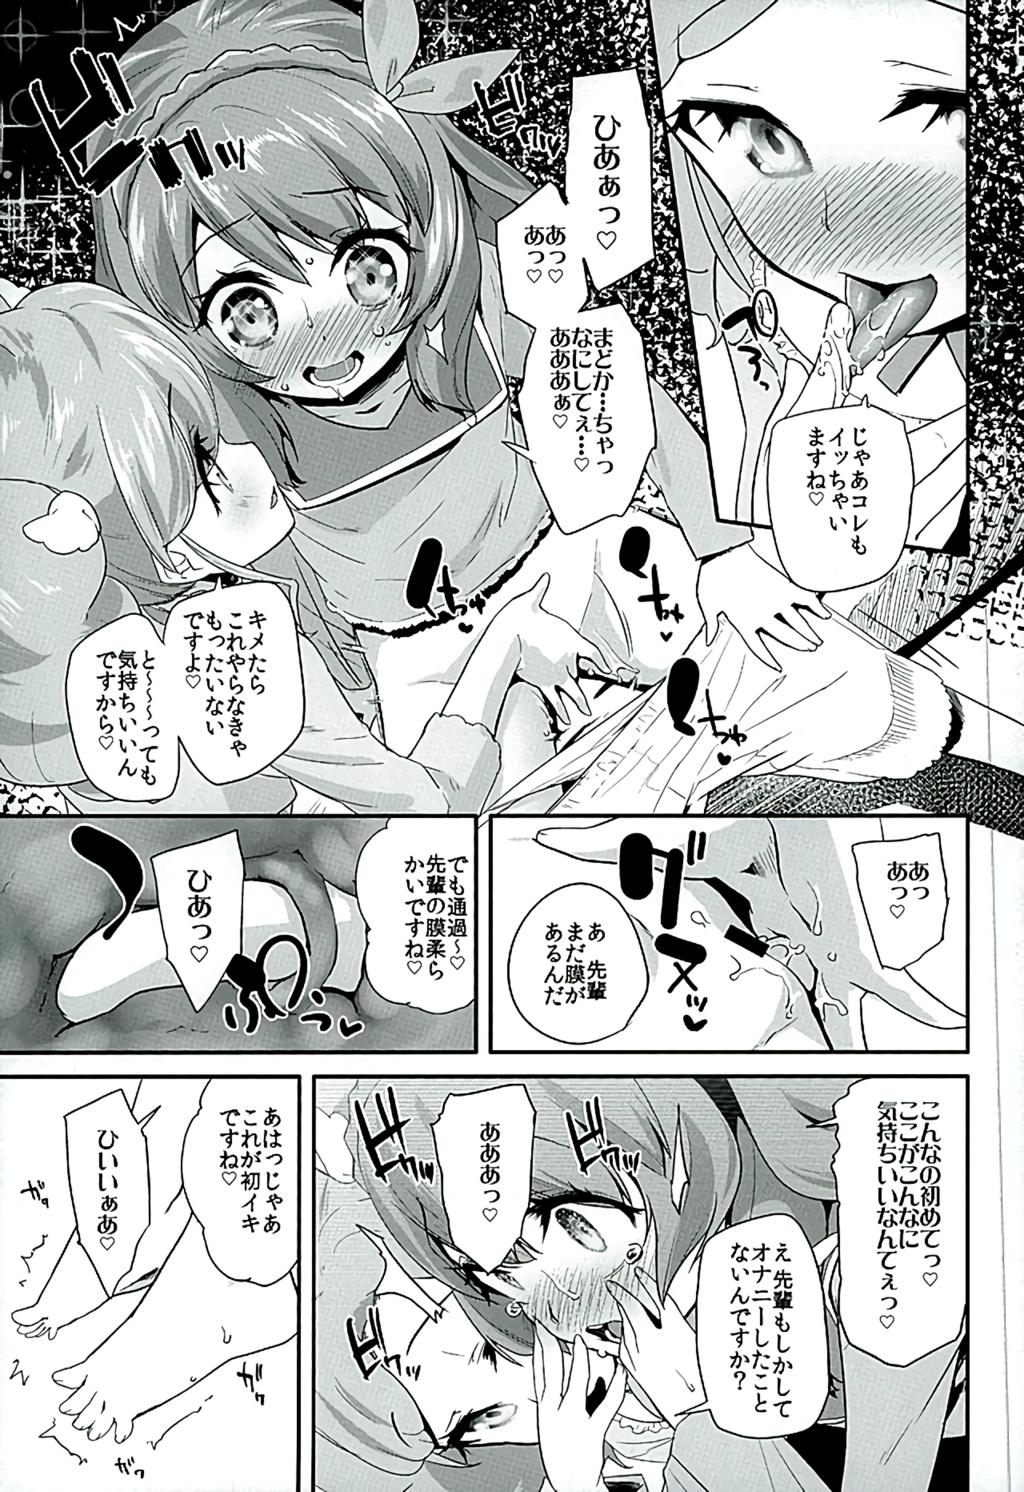 Young Tri Tri Trips! - Aikatsu Hermosa - Page 6